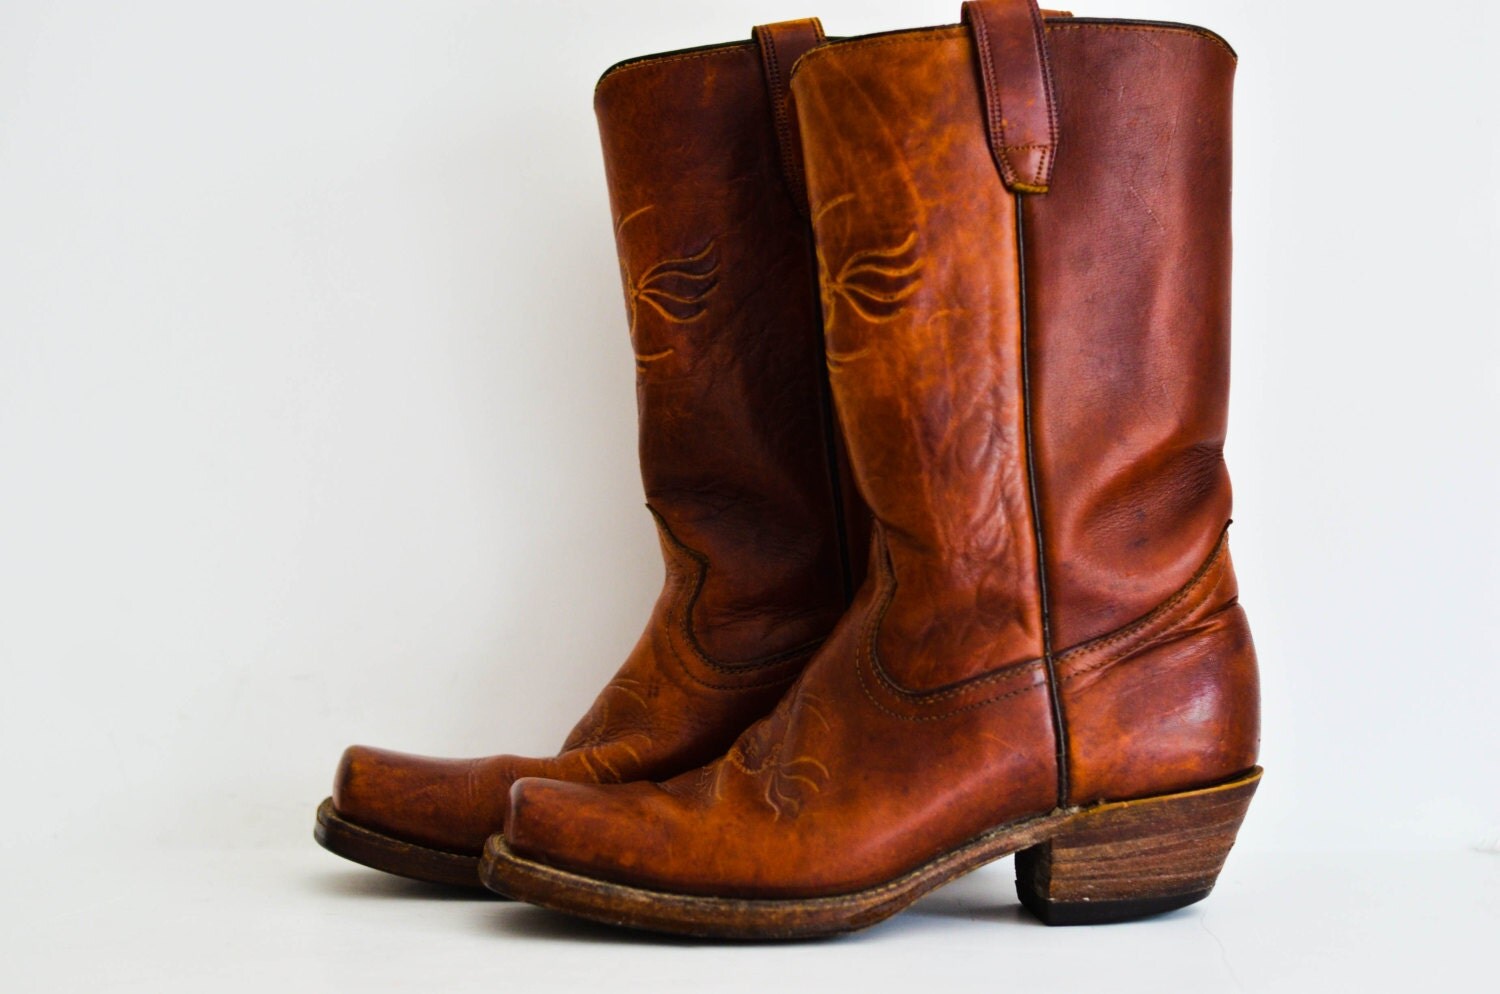 Vintage Mens Cognac Cowboy Boots Size 9 by MonikaJayVintage